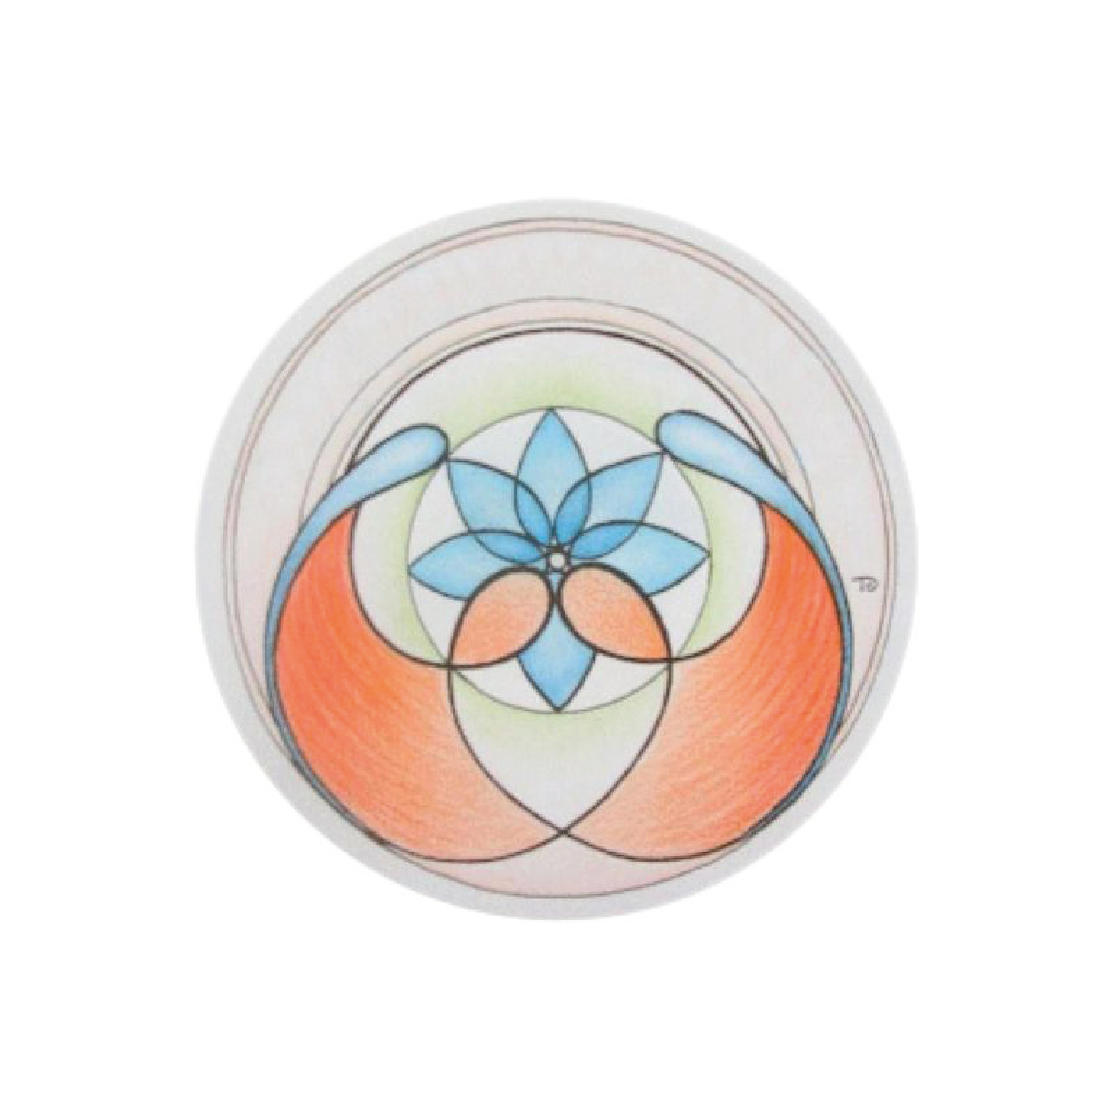 www.mandalavereniging.nl